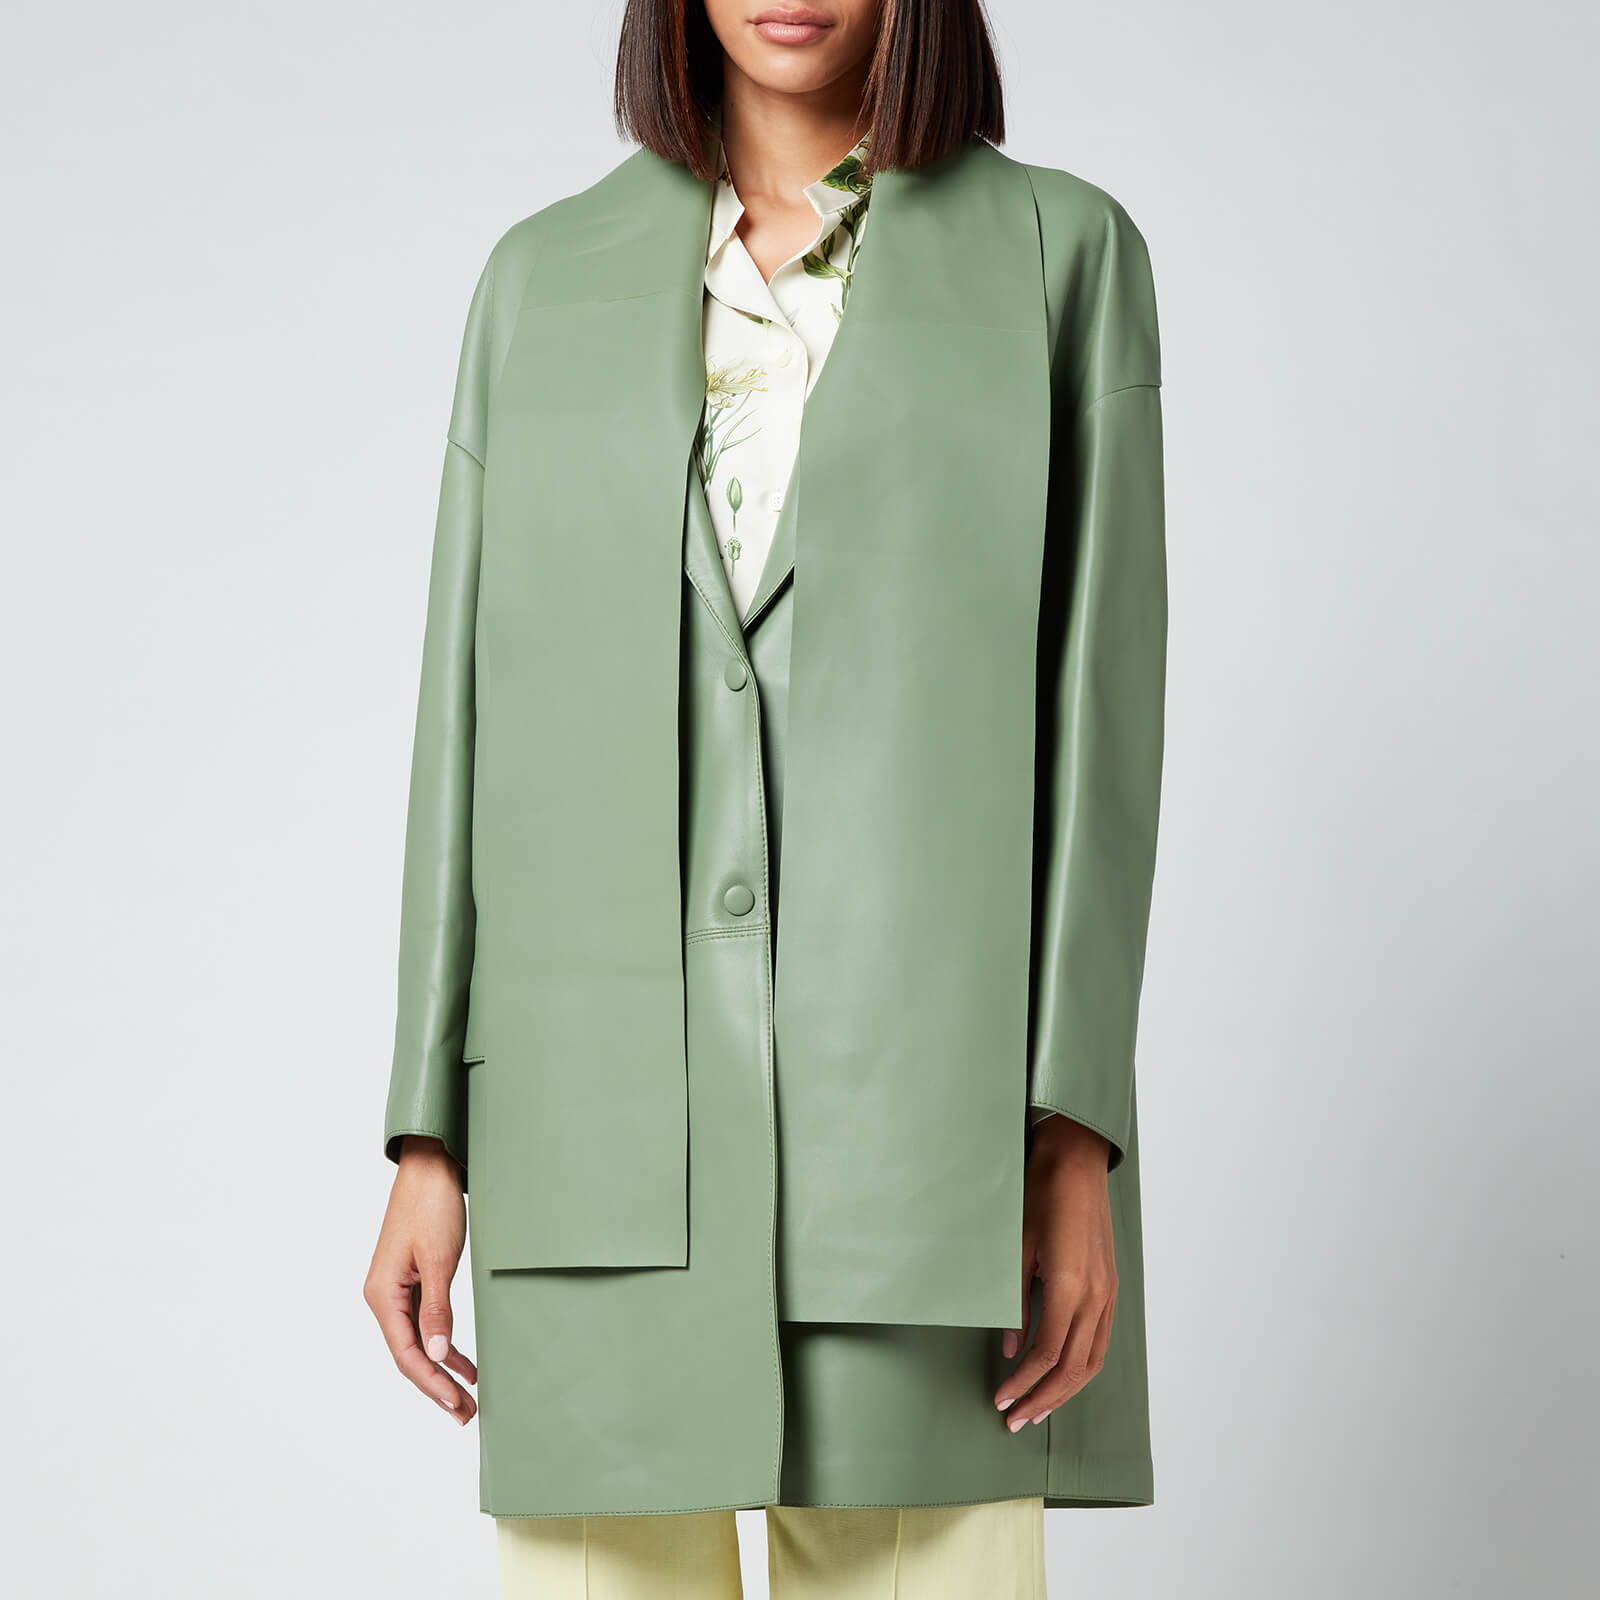 Salvatore Ferragamo Women's Long Leather Coat - Hedren Green - IT 38